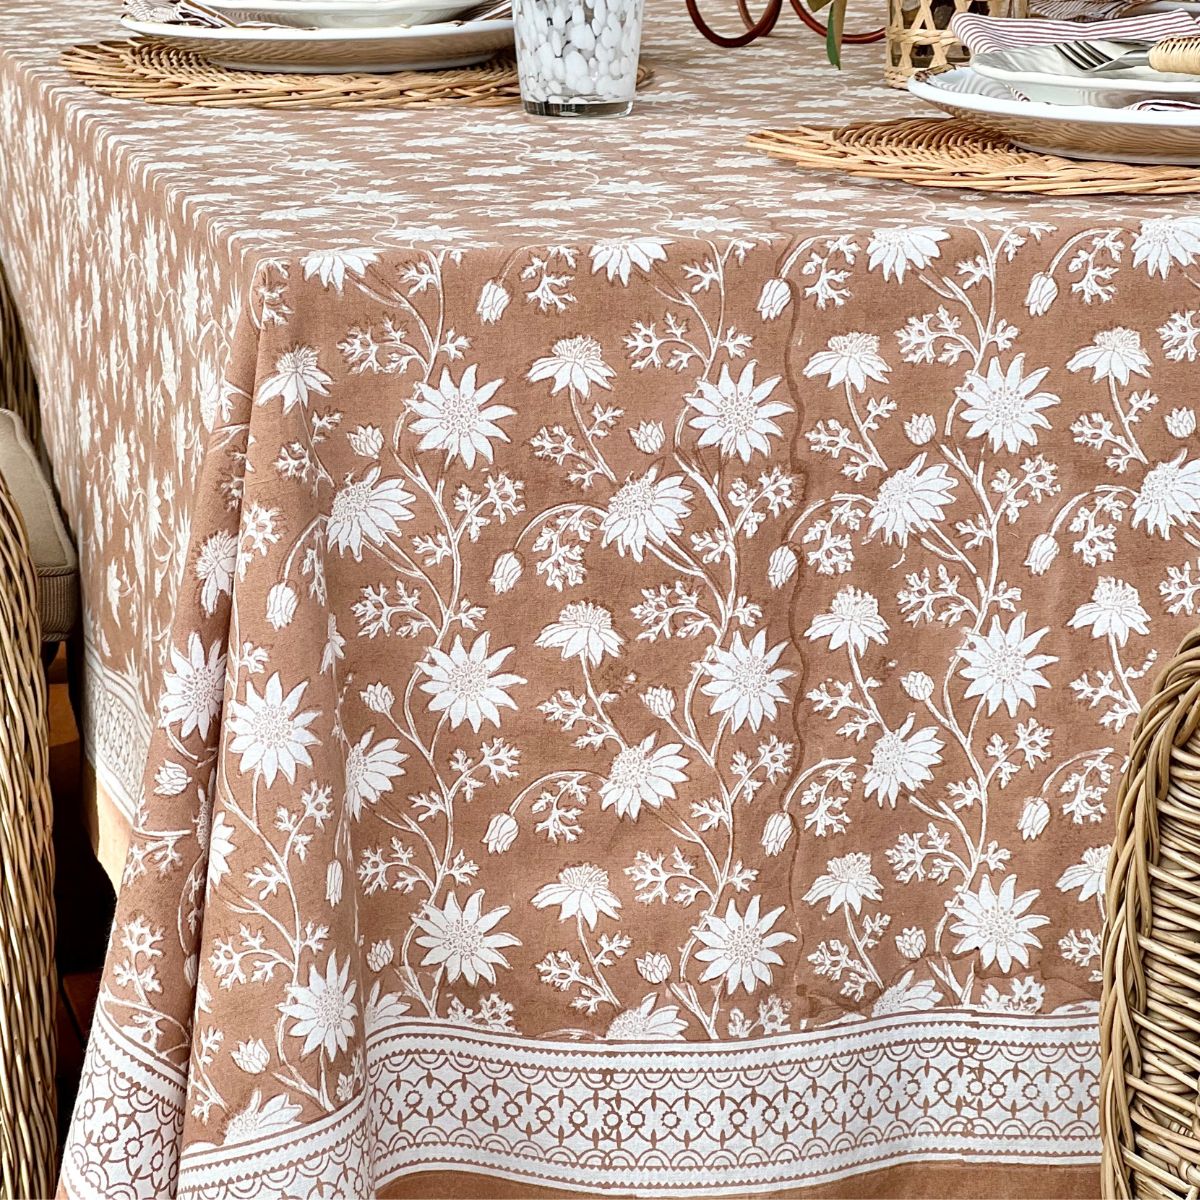 Sample Flannel flower dark brown Tablecloth 180 x 340 cm ©